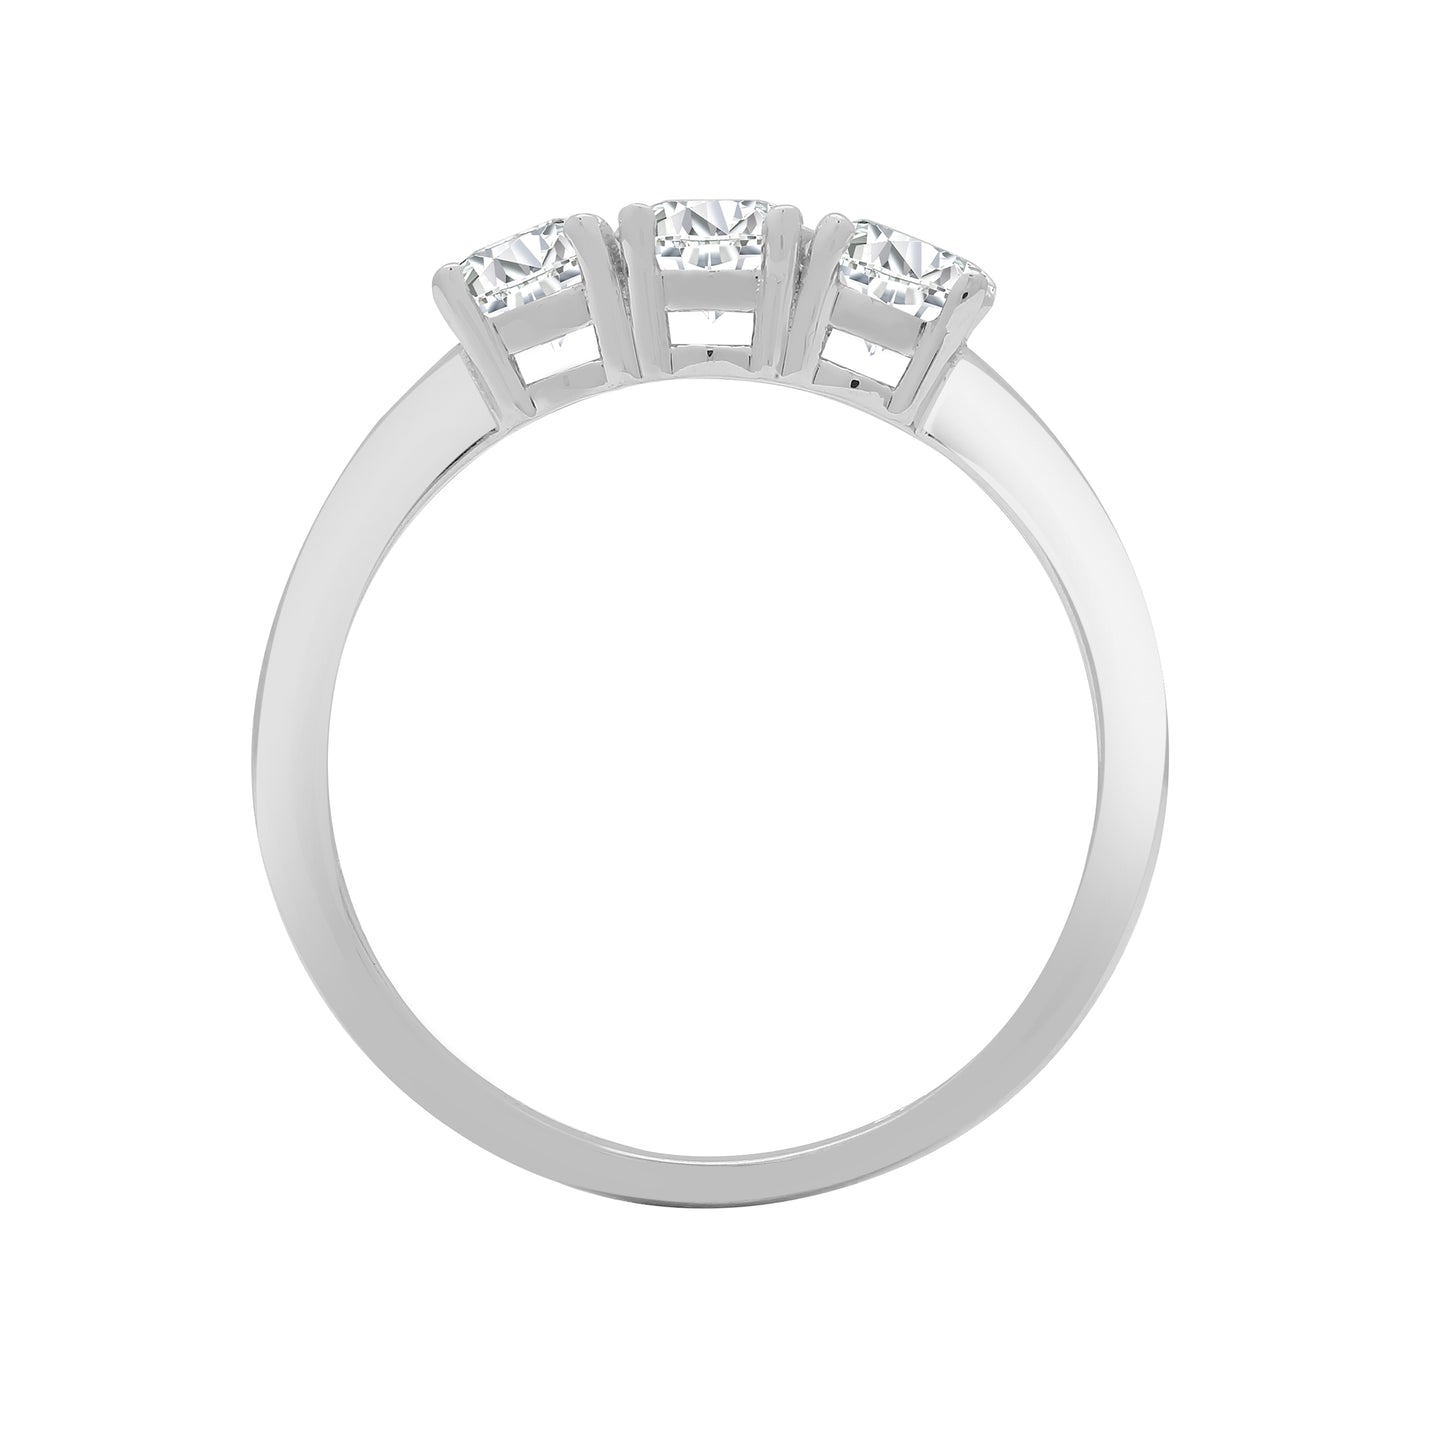 18ct White Gold  1.5ct Diamond 3 Stone Uniform Trilogy Ring 5mm - 18R945-150